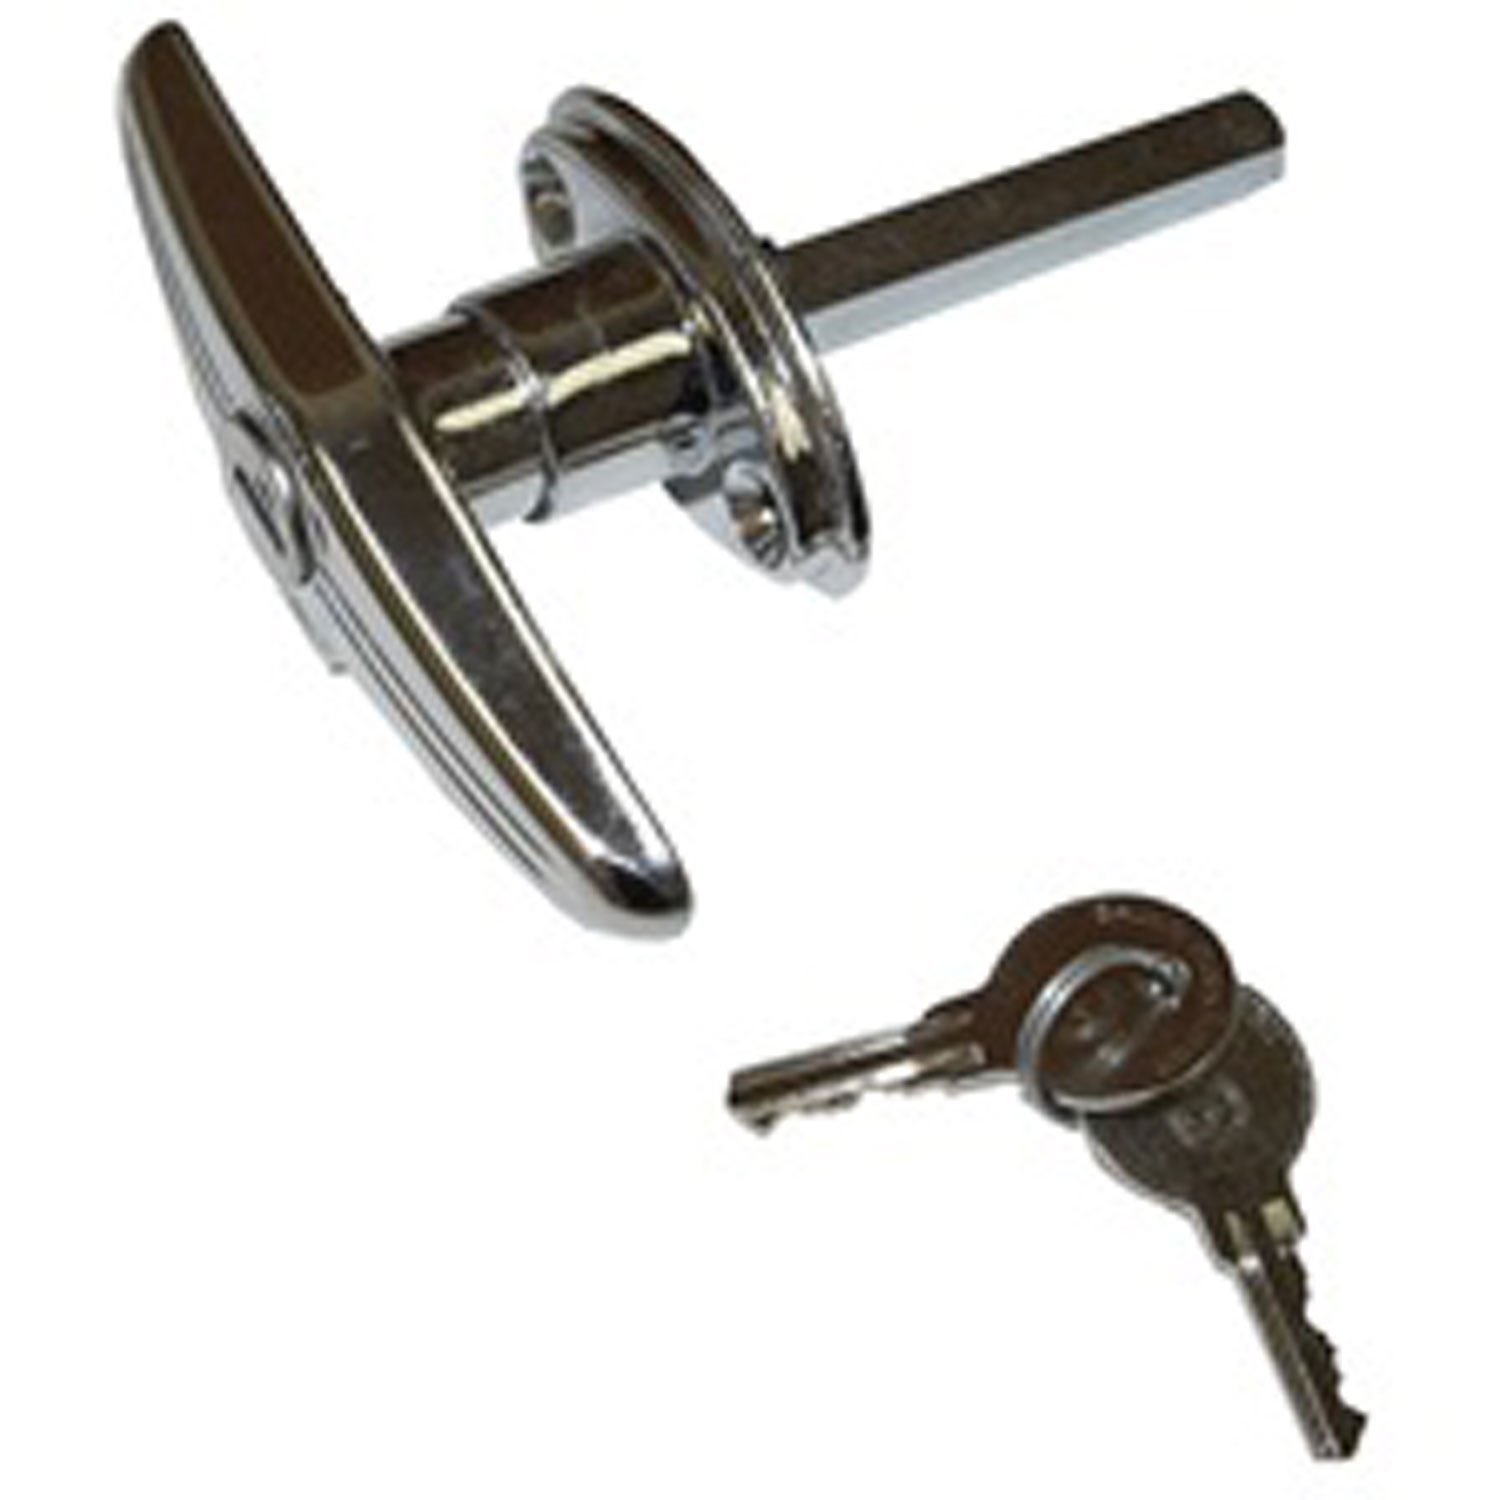 This chrome locking liftgate t-handle from Omix-ADA fits 77-83 Jeep CJ5 77-86 Jeep CJ7 and 81-86 Jeep CJ8. Keys included.